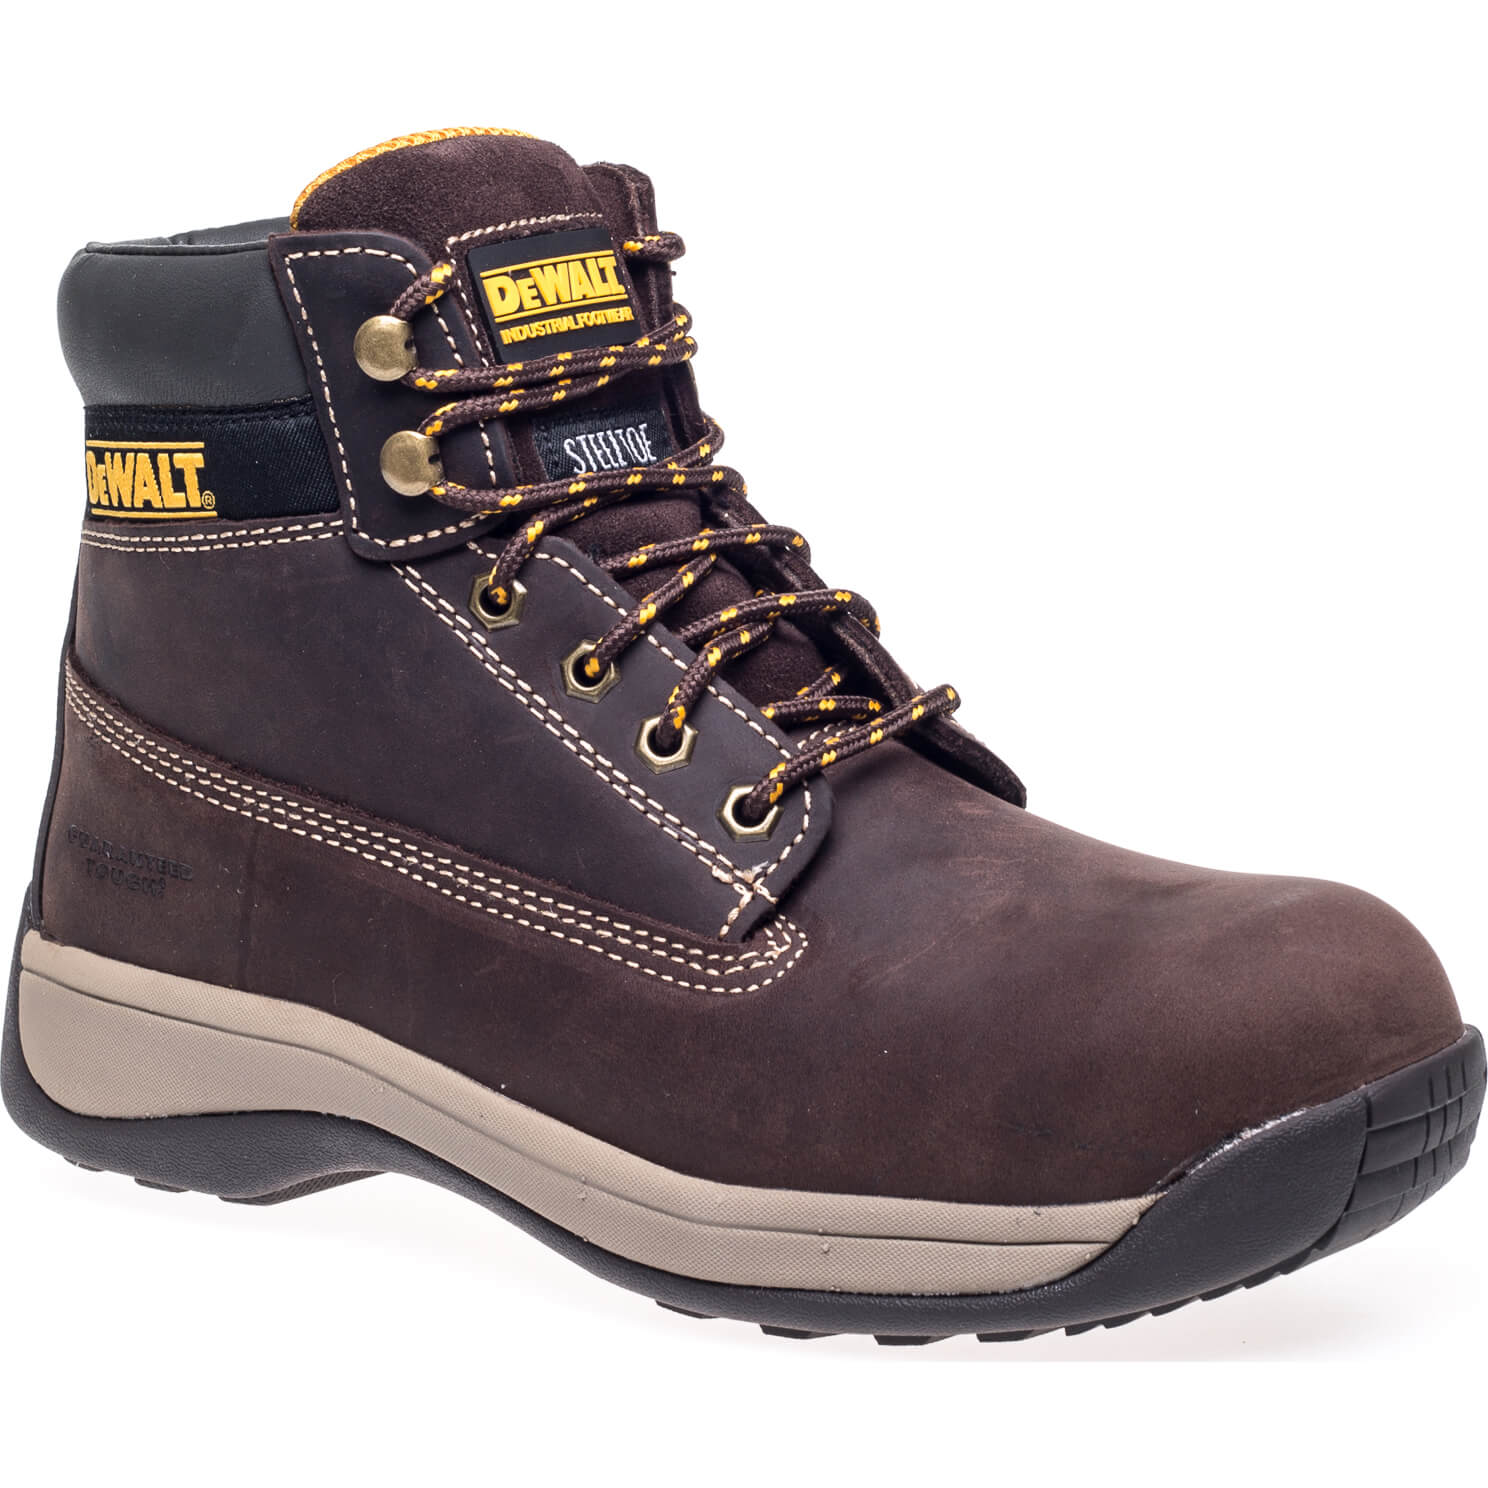 Photos - Safety Equipment DeWALT Apprentice Nubuck Safety Hiker Boots Brown Size 7 